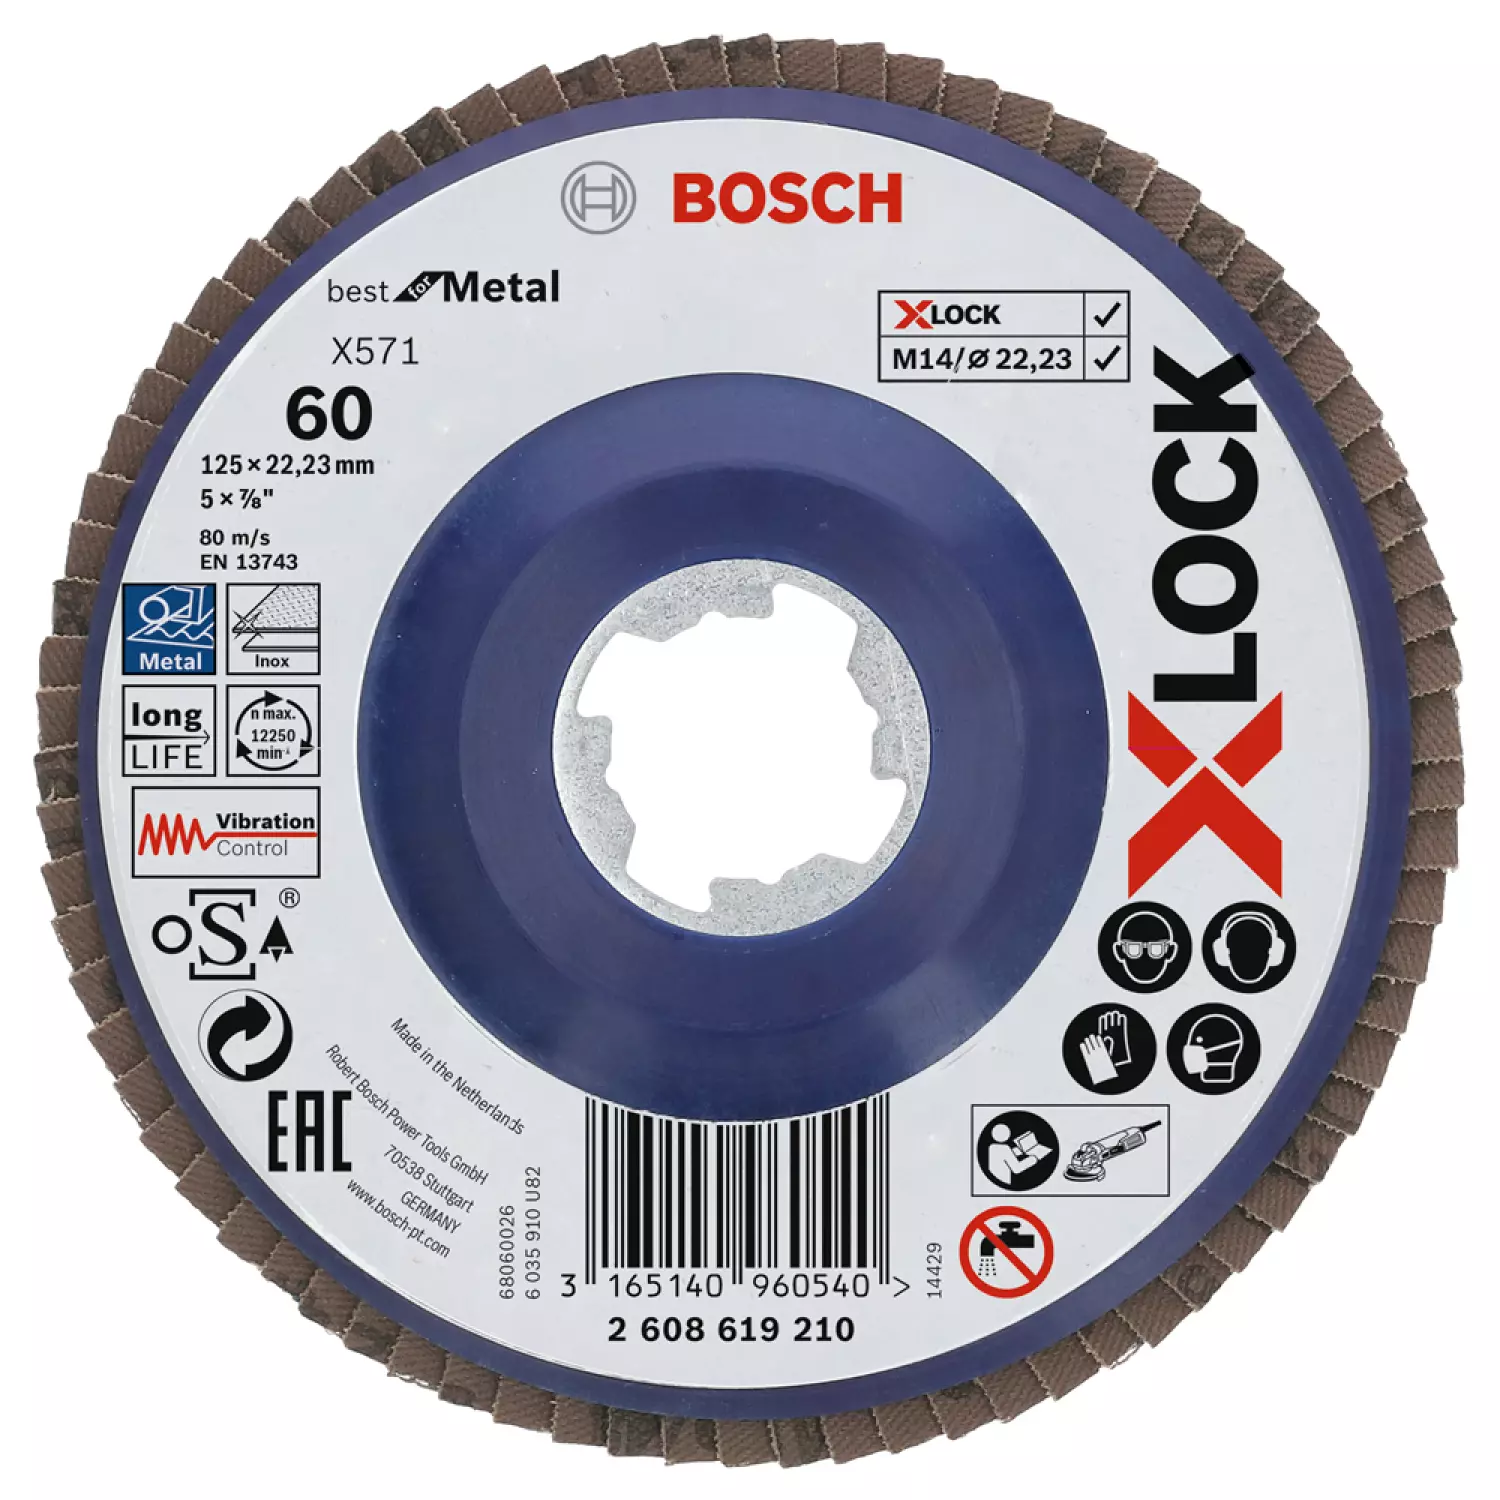 Bosch 2608619210 - X-LOCK disque à lamelles Best for Metal recht, plastique, Ø125mm, G 60, X571